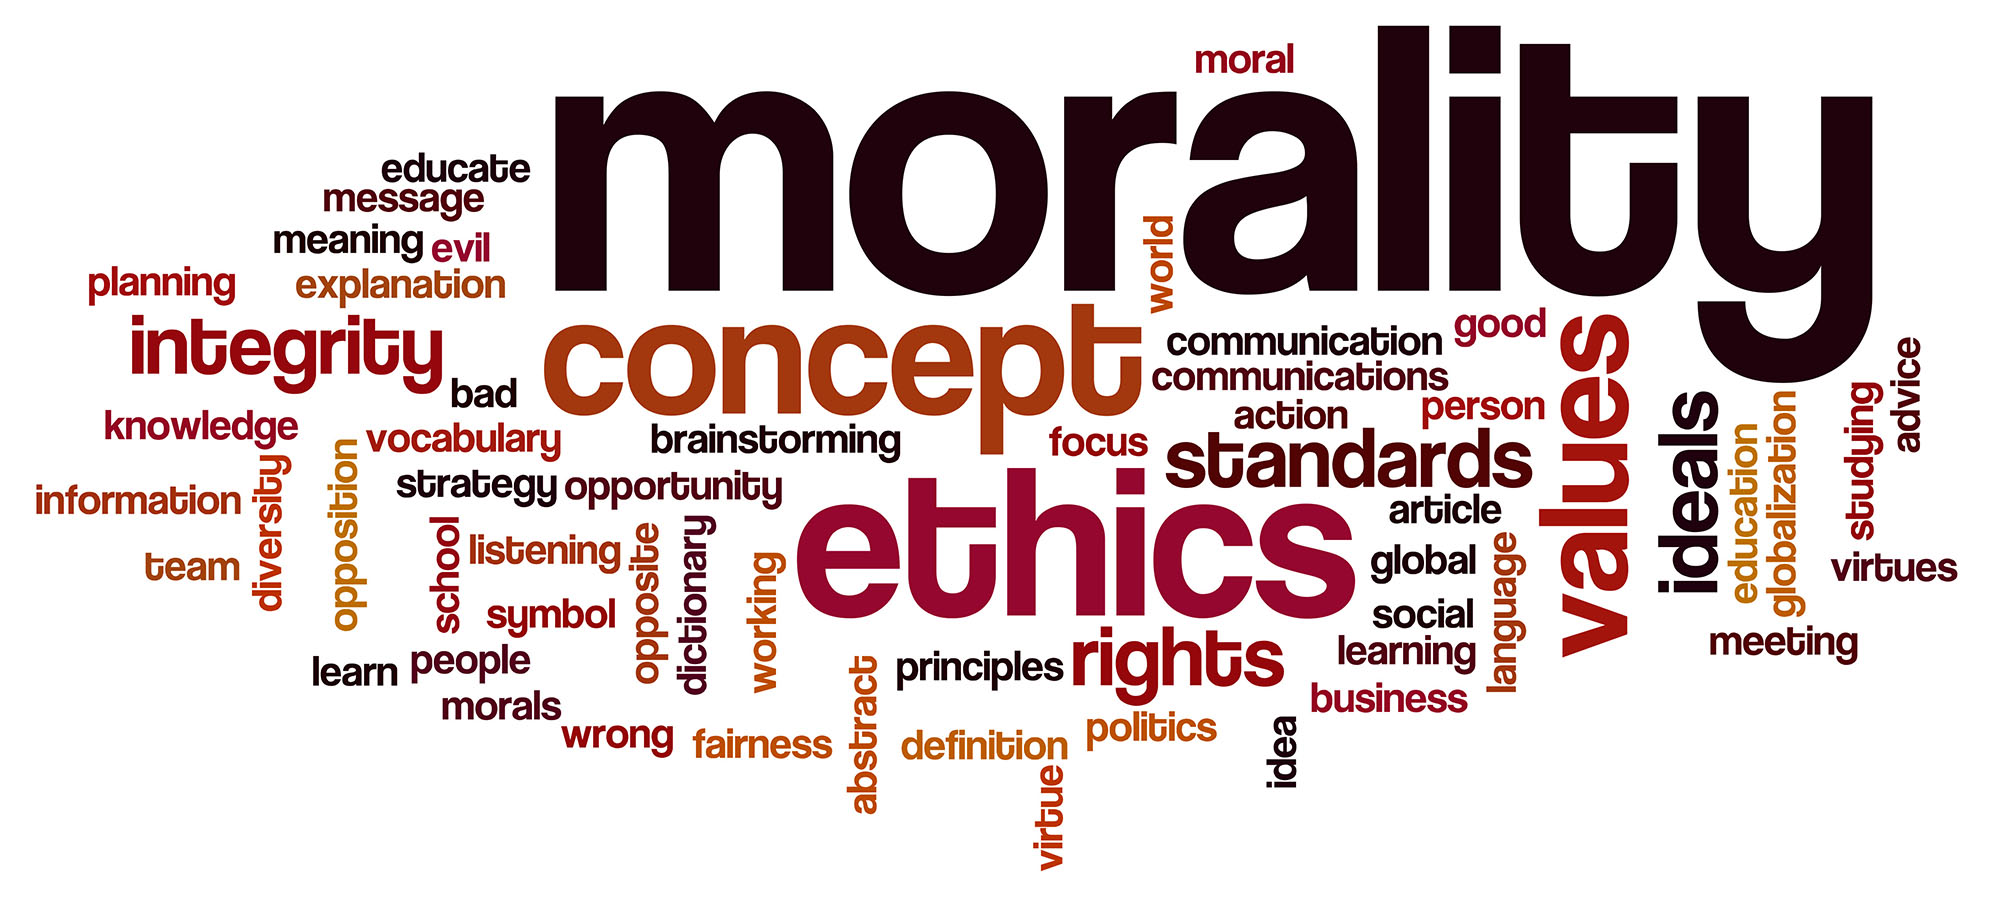 Morality Word Cloud